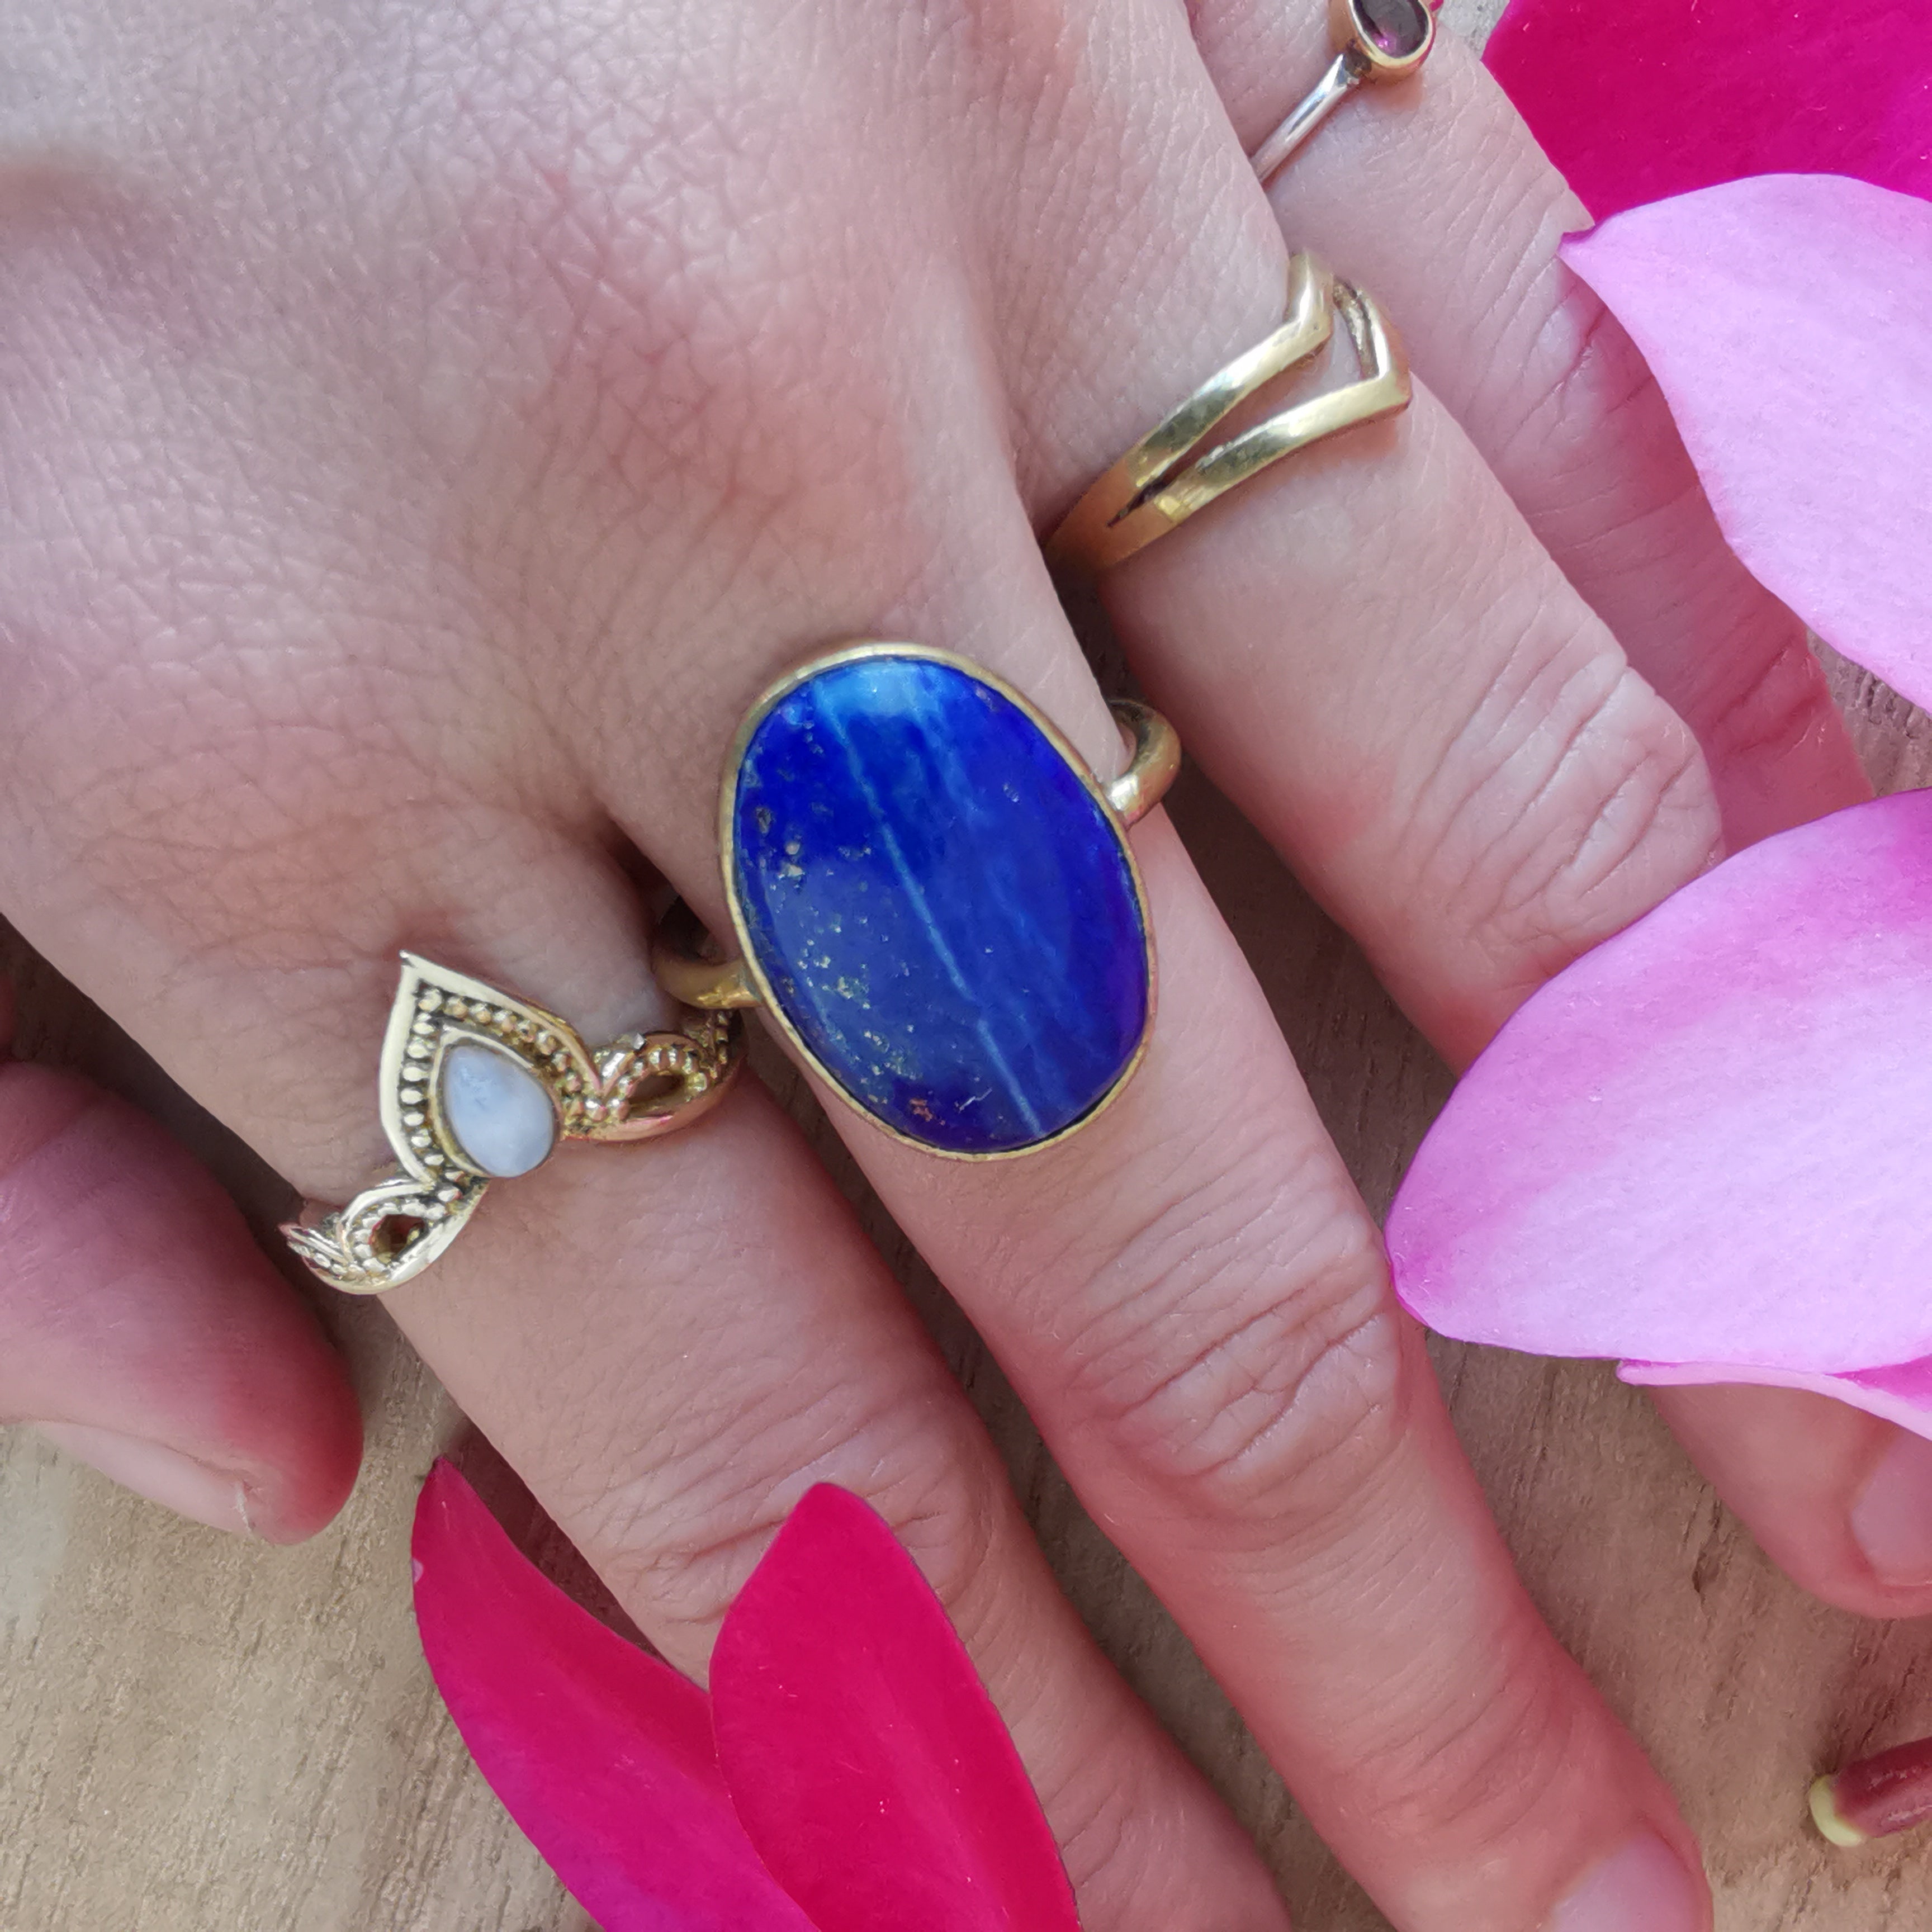 Premium Brass Statement Ring Lapis Lazuli Size US 6.5